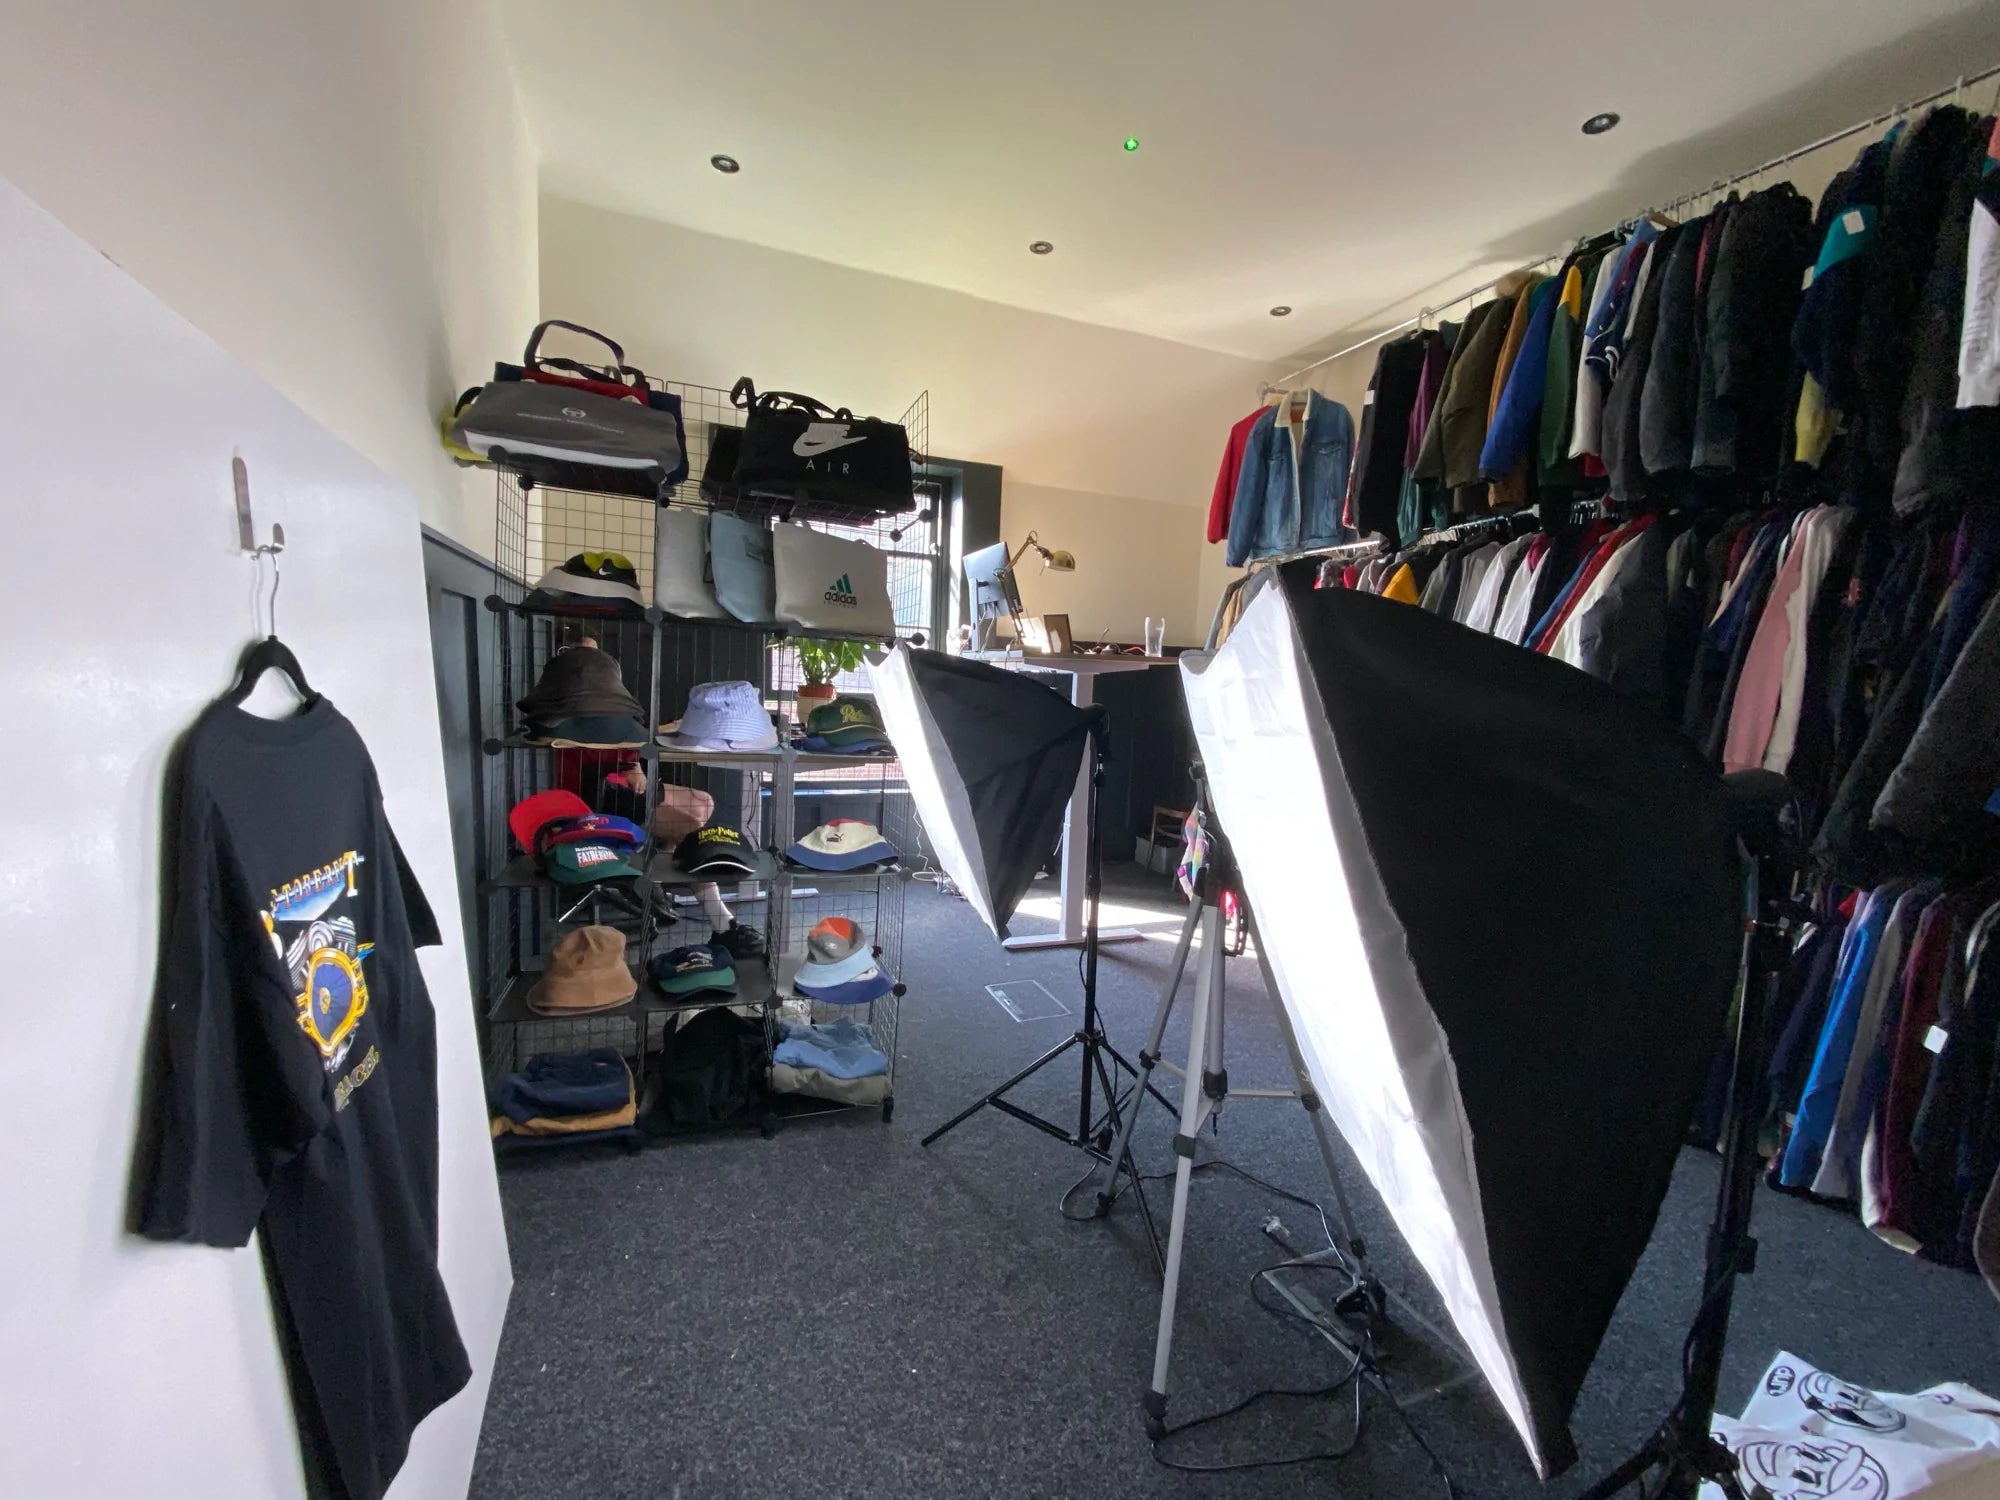 A basic photo studio setup for clothing brands